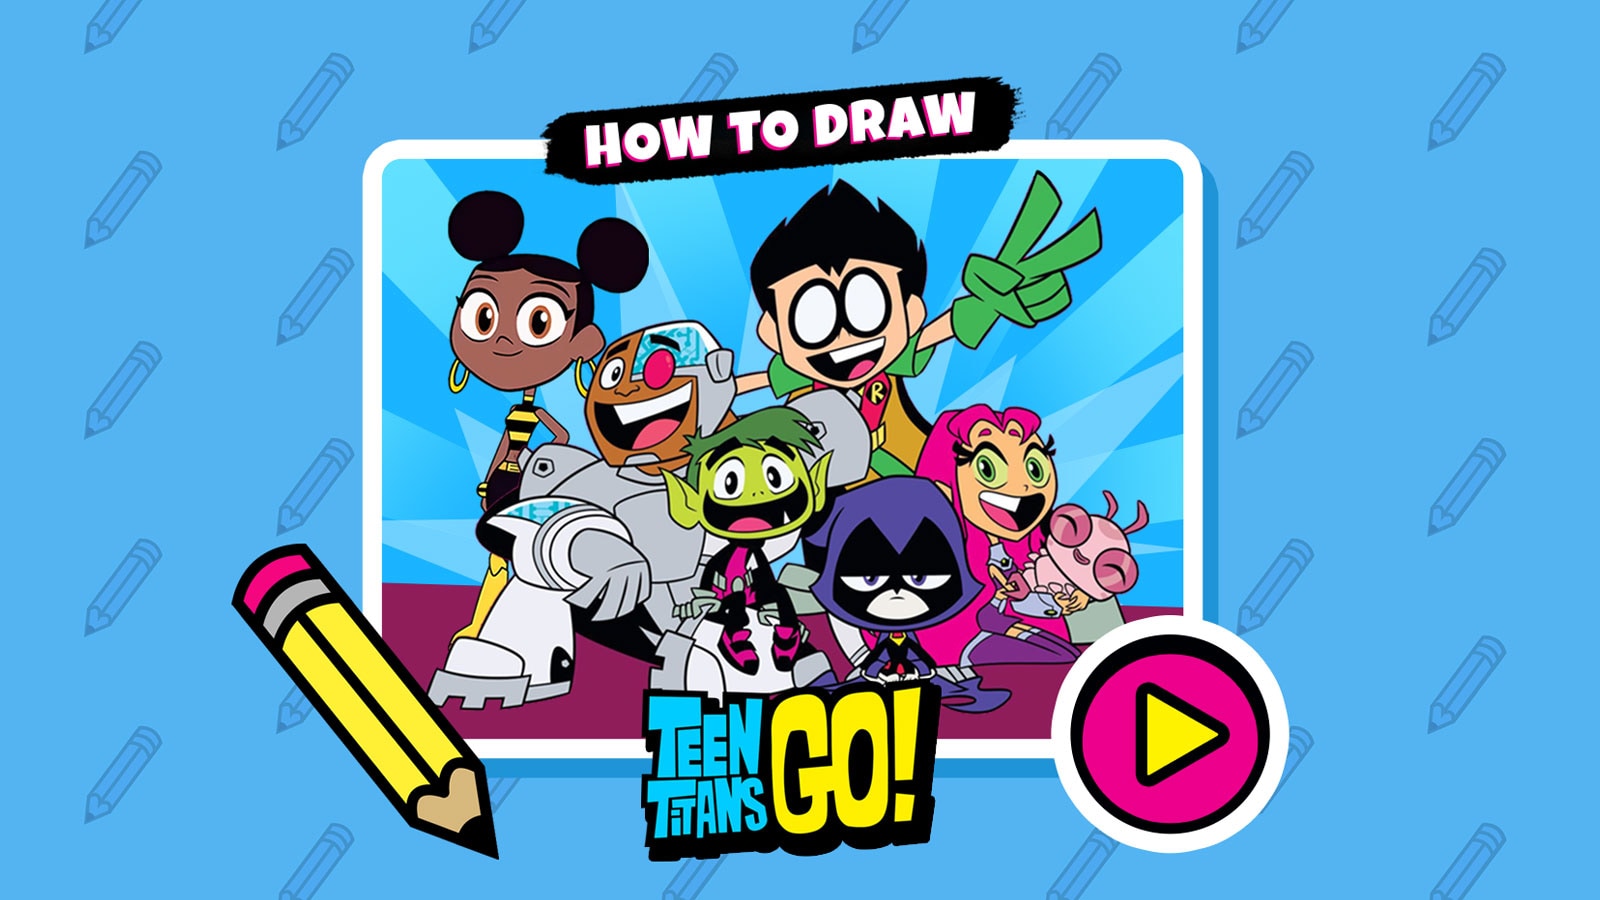 Play Teen Titans Go! games | Free online Teen Titans Go! games | Cartoon  Network